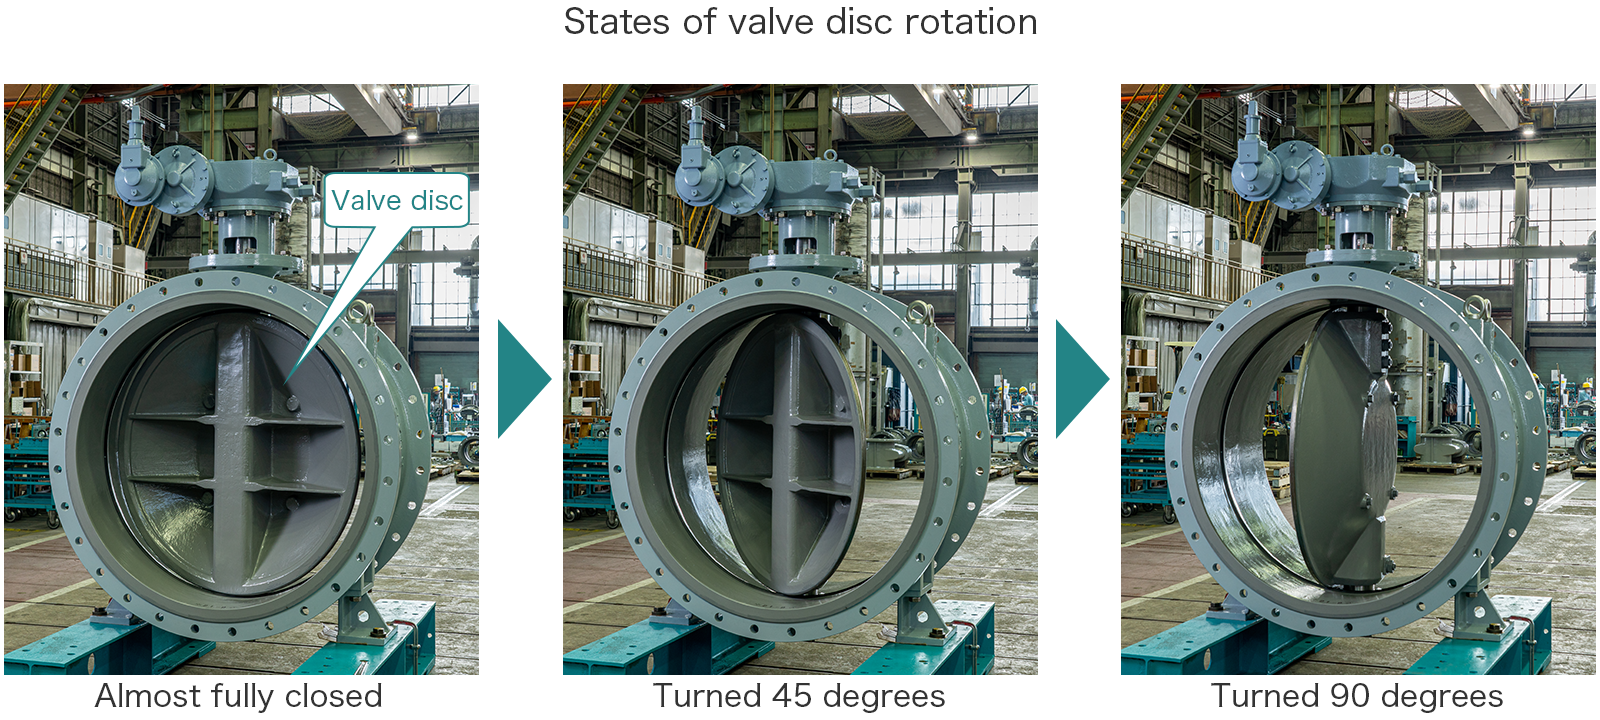 States of valve disc rotation